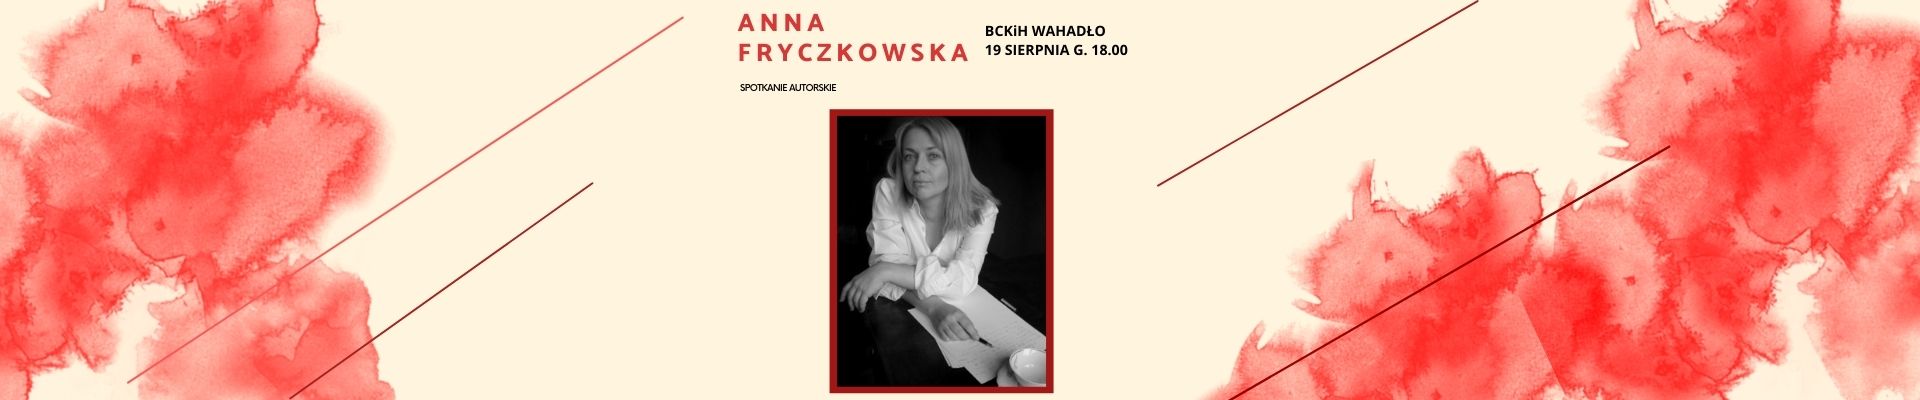 Anna Fryczkowska – spotkania autorskie [19 siepnia]